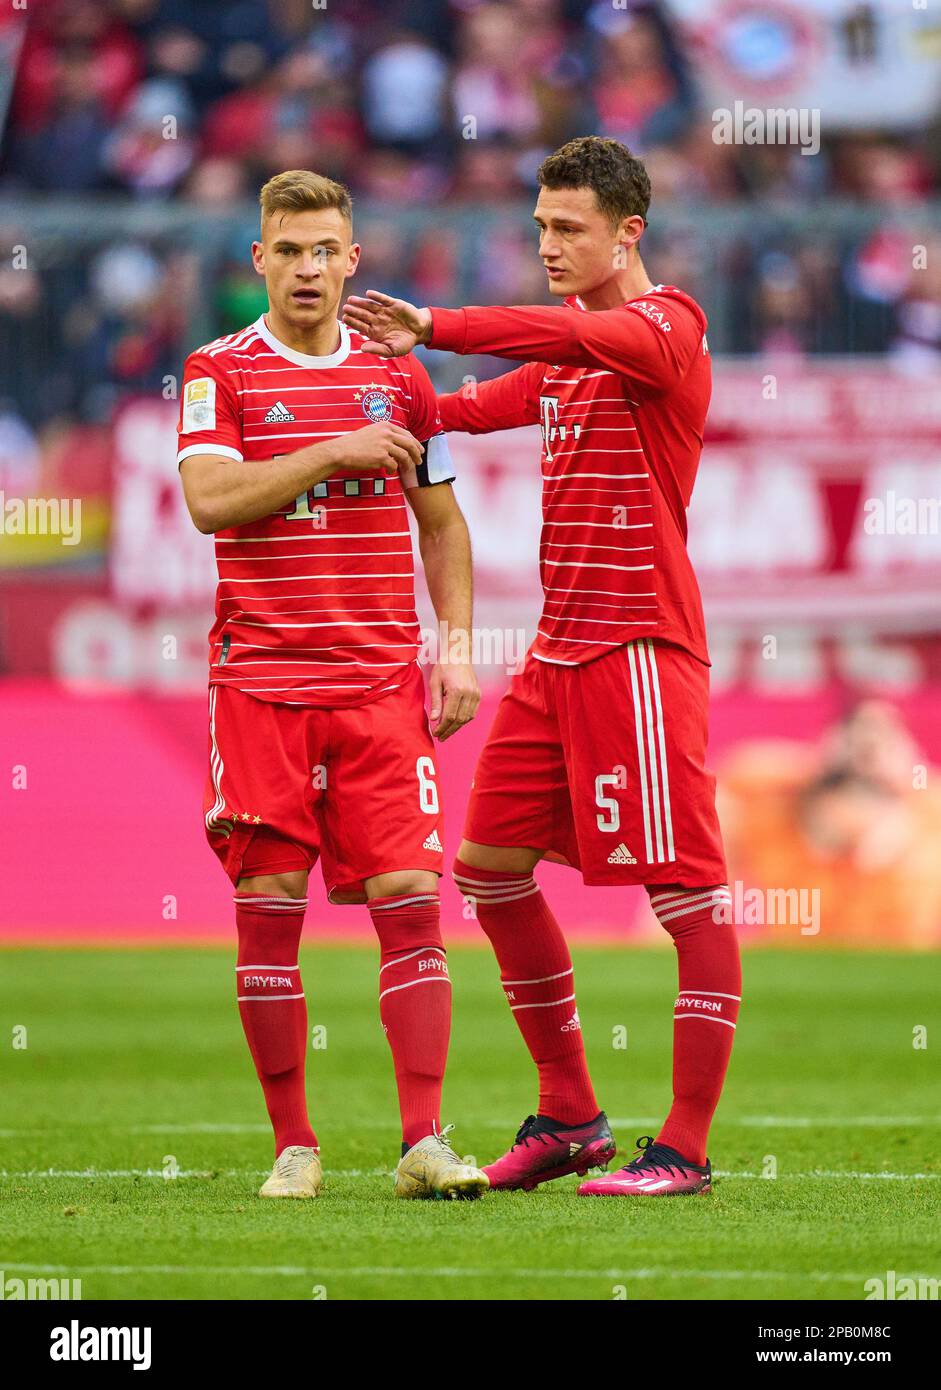 Video: Bayern's top 5 goals Bundesliga in 2022/23